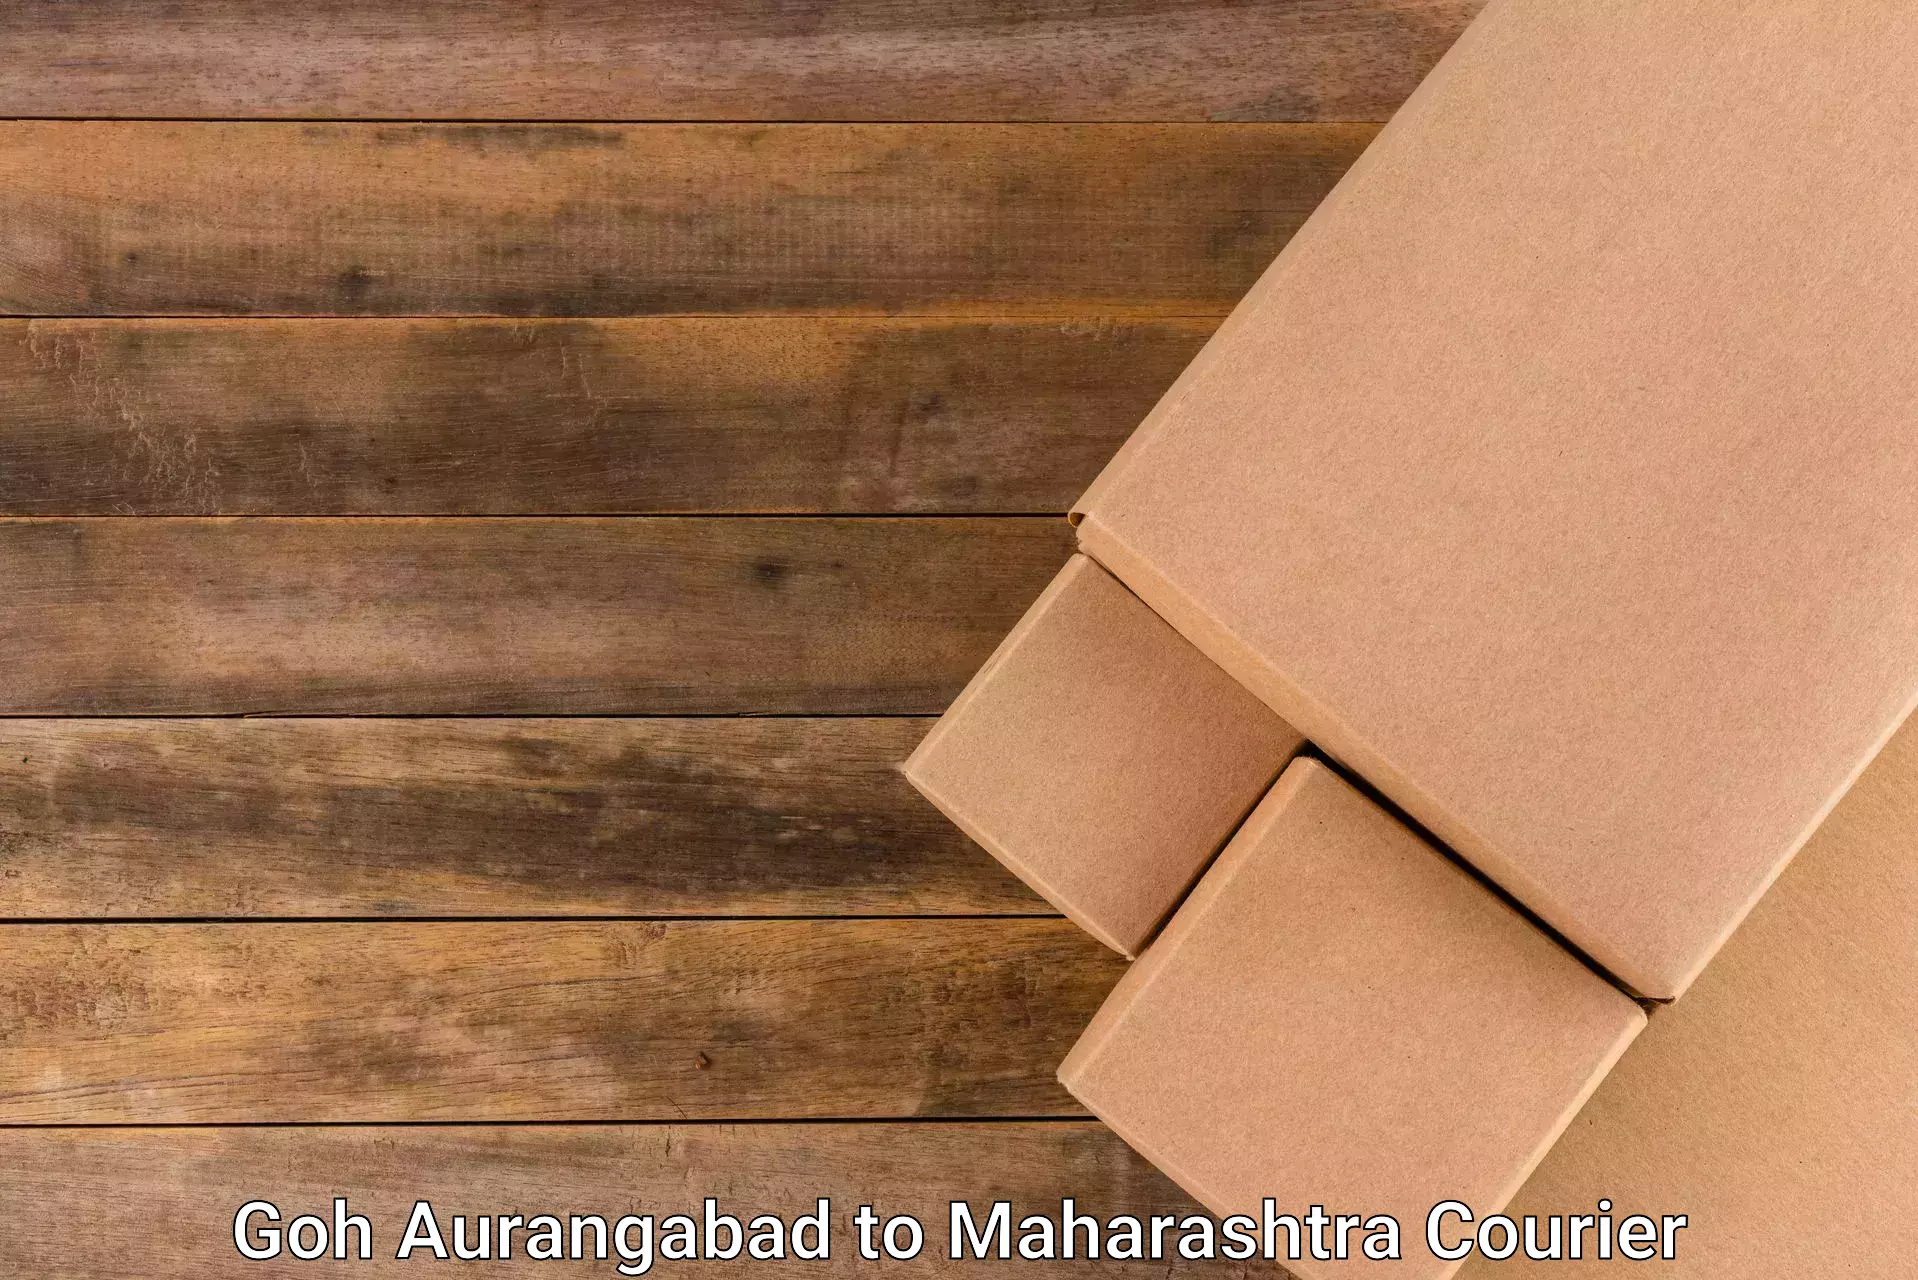 Diverse delivery methods Goh Aurangabad to Gadchiroli